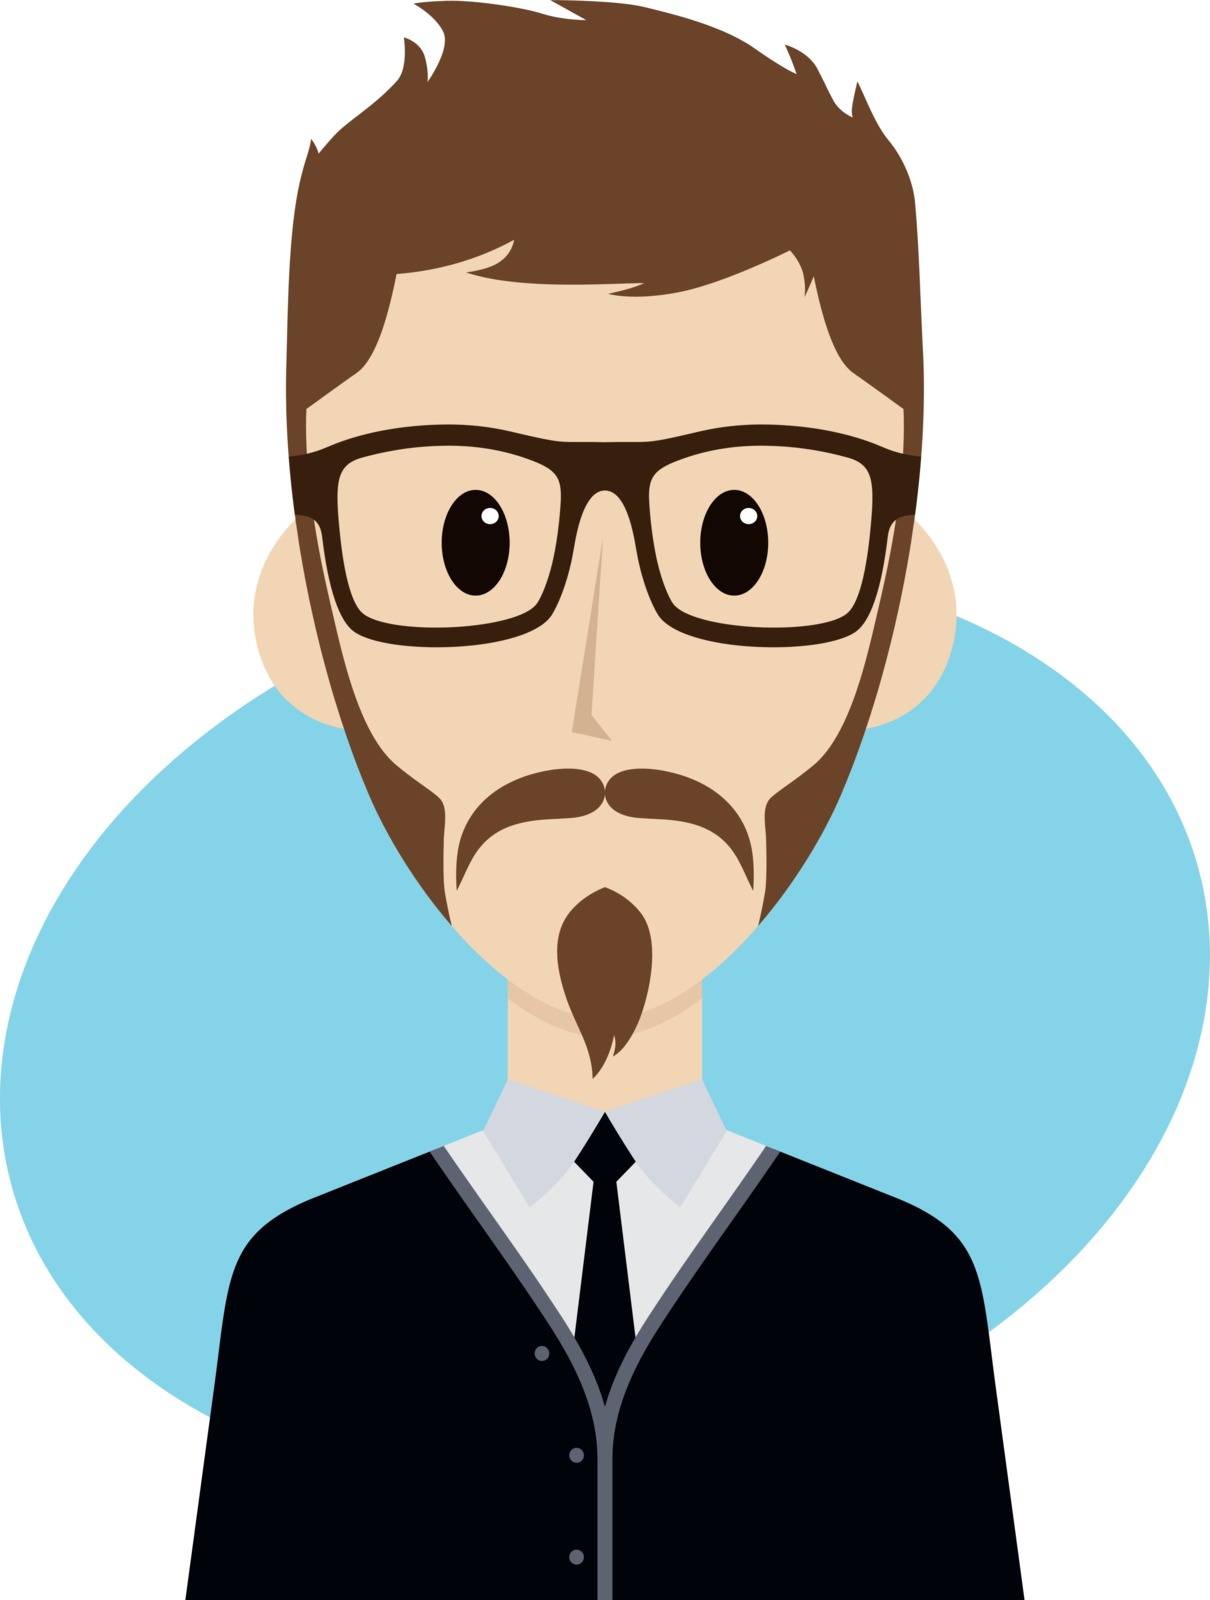 man avatar user picture cartoon character vector illustration